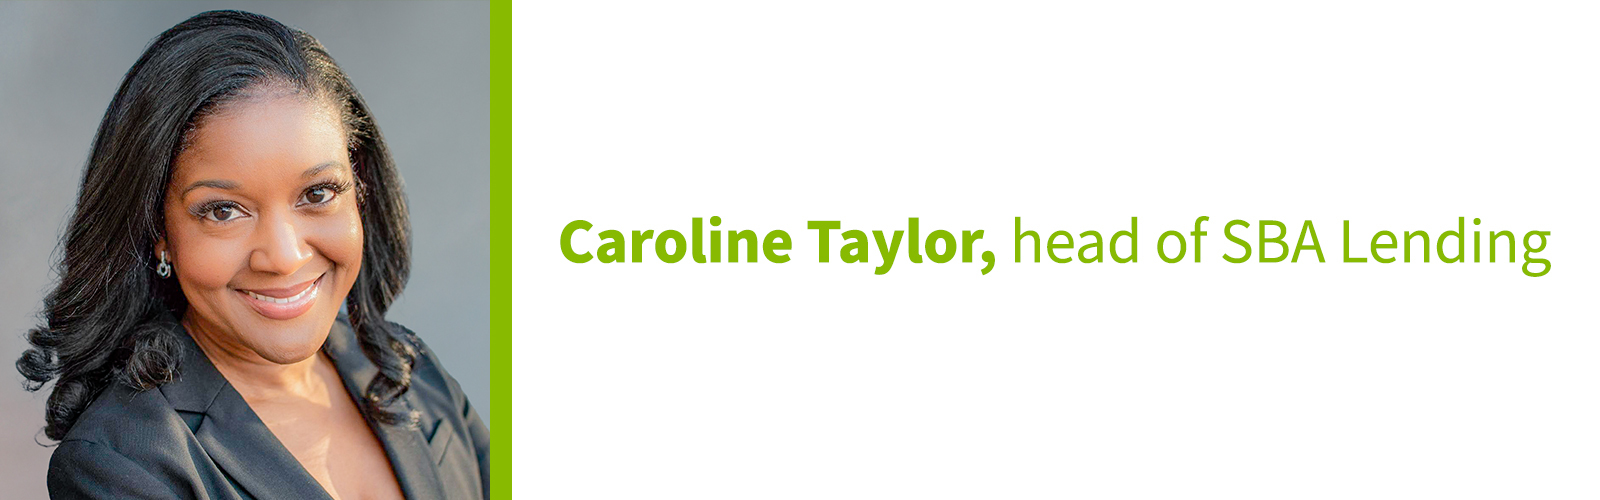 Caroline Taylor, head of SBA Lending